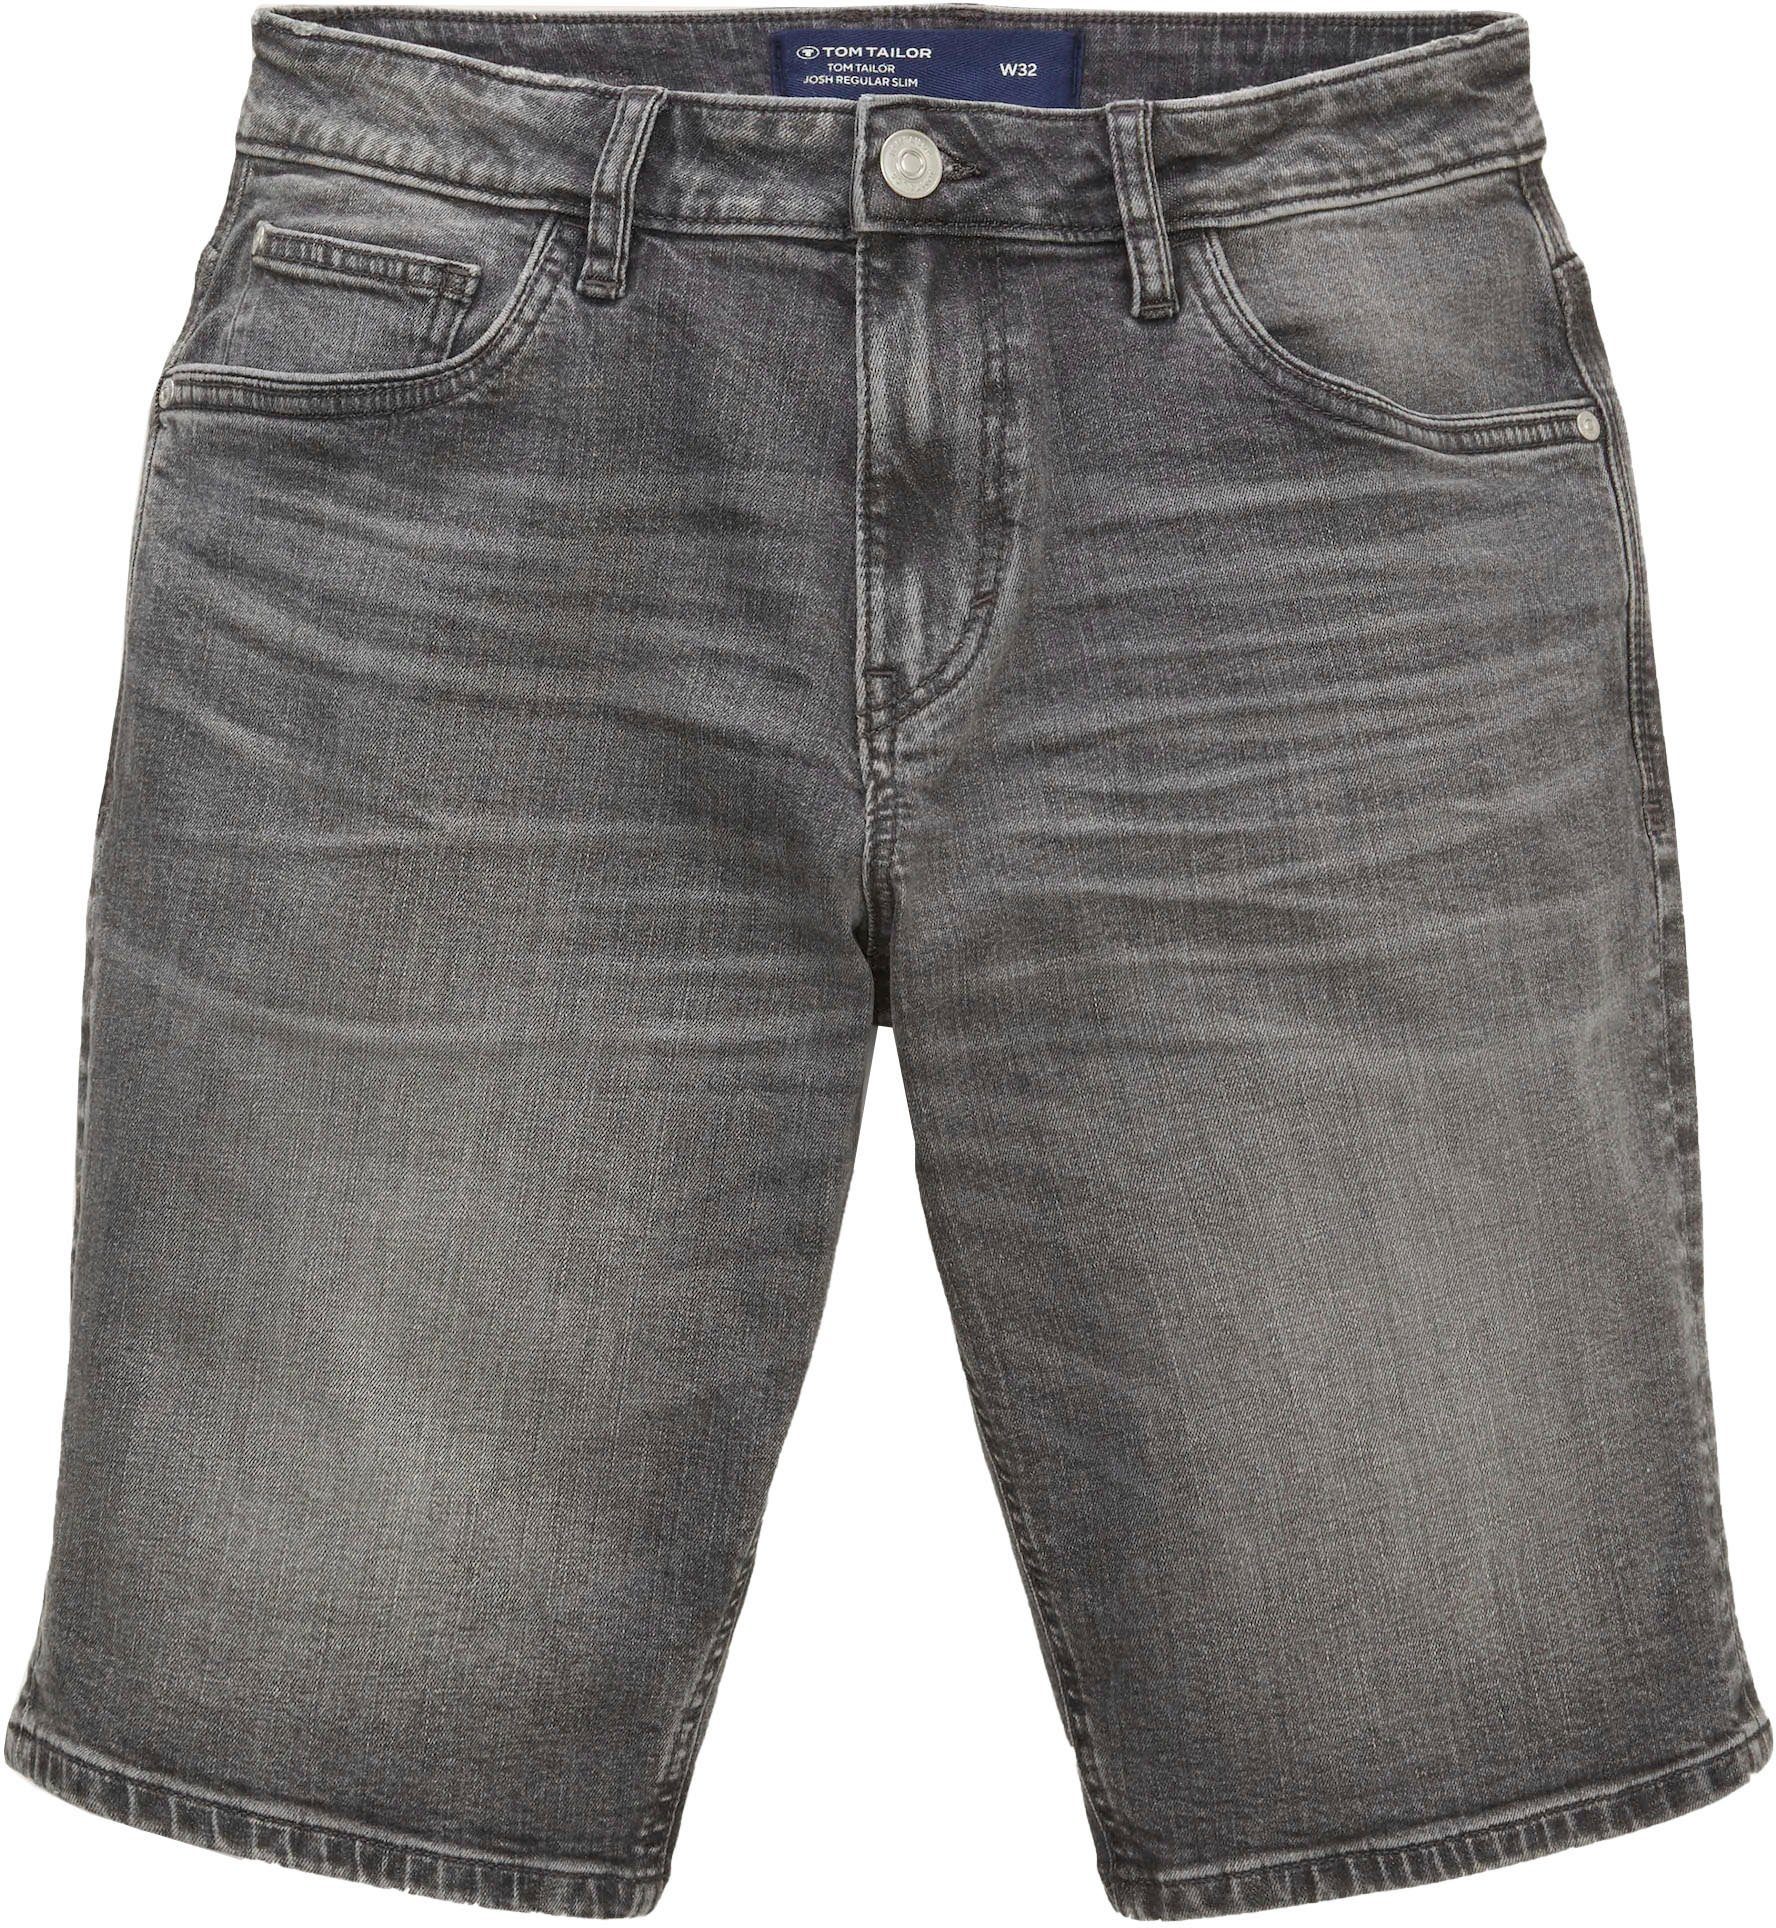 TOM TAILOR mid stone 5-Pocket-Jeans used